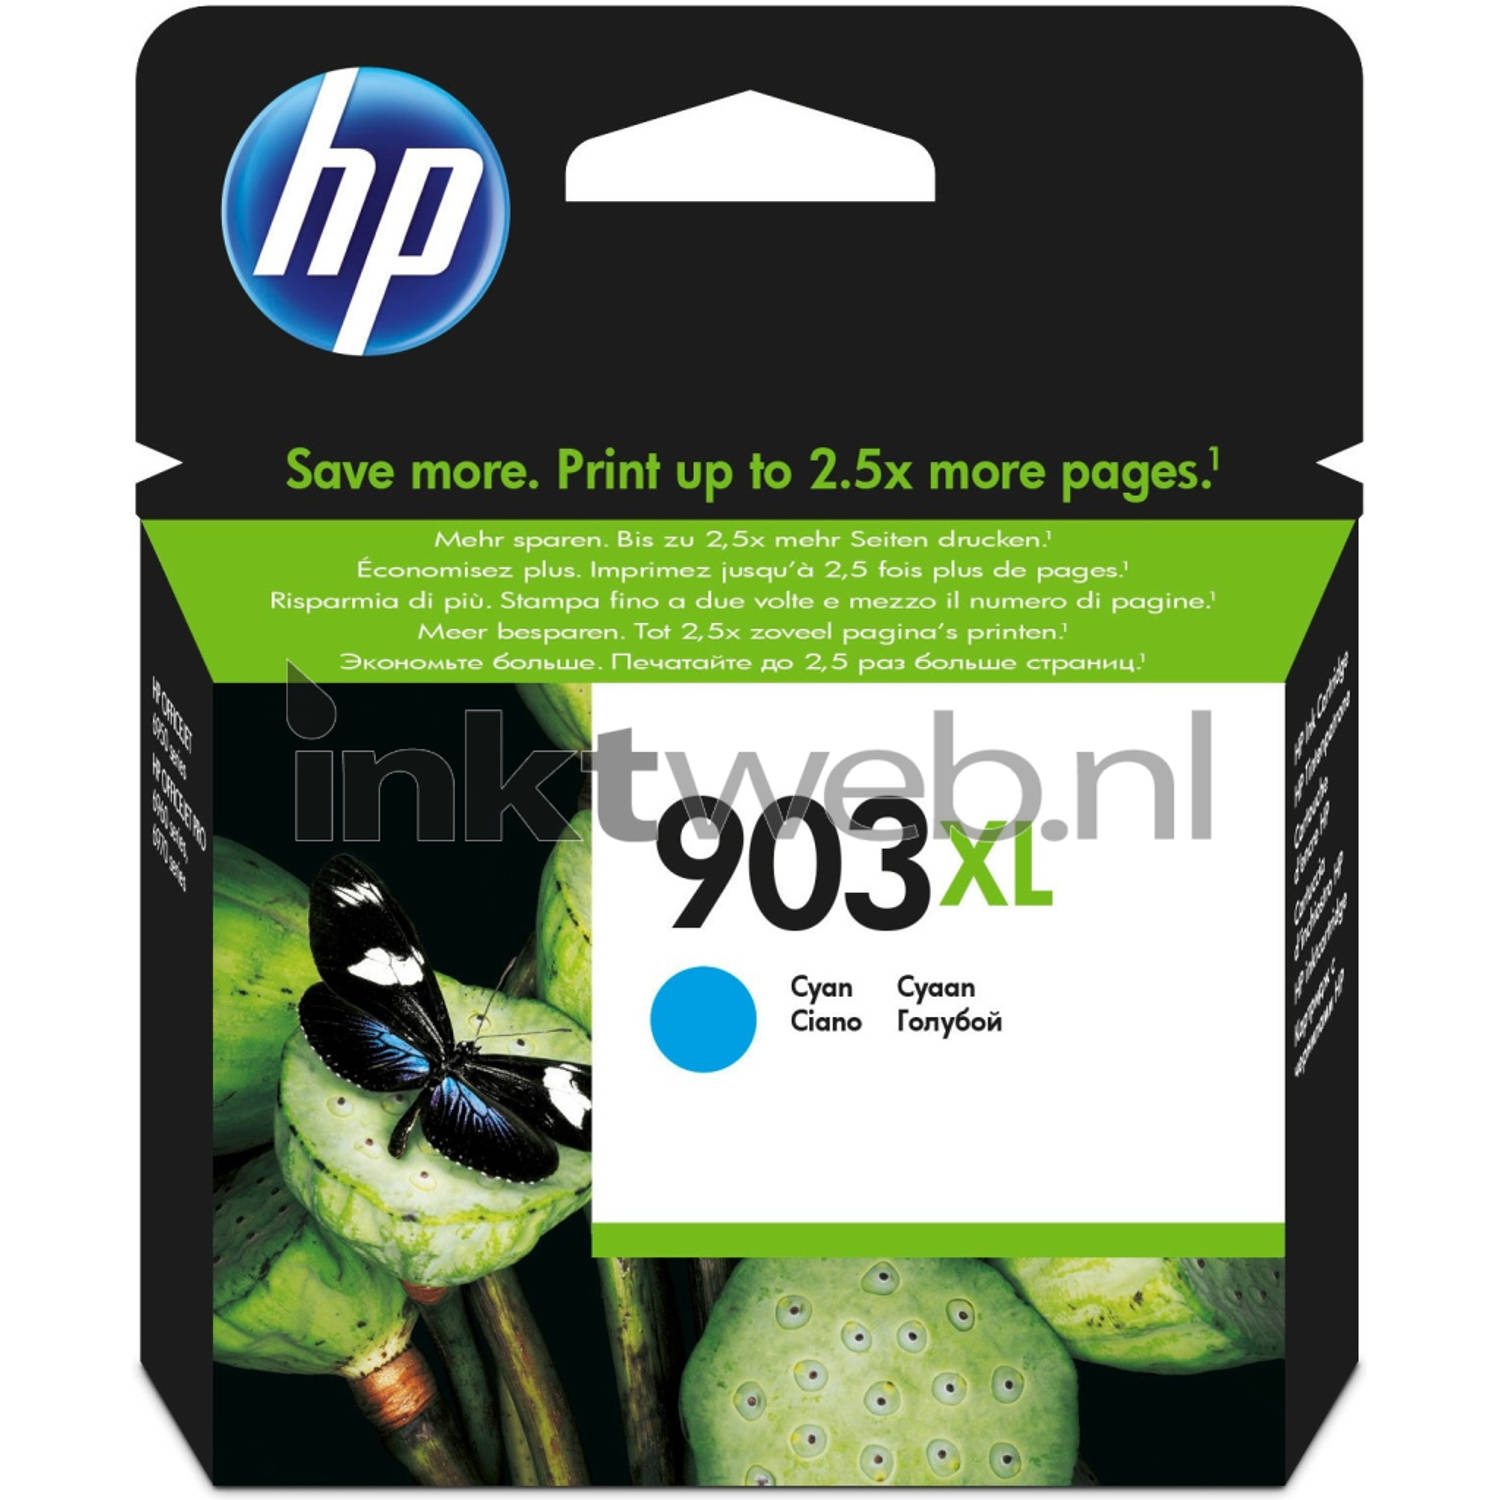 HP HP 903XL Ink Cartridge Cyan High Yield 825 Pages (T6M03AE#BGX)